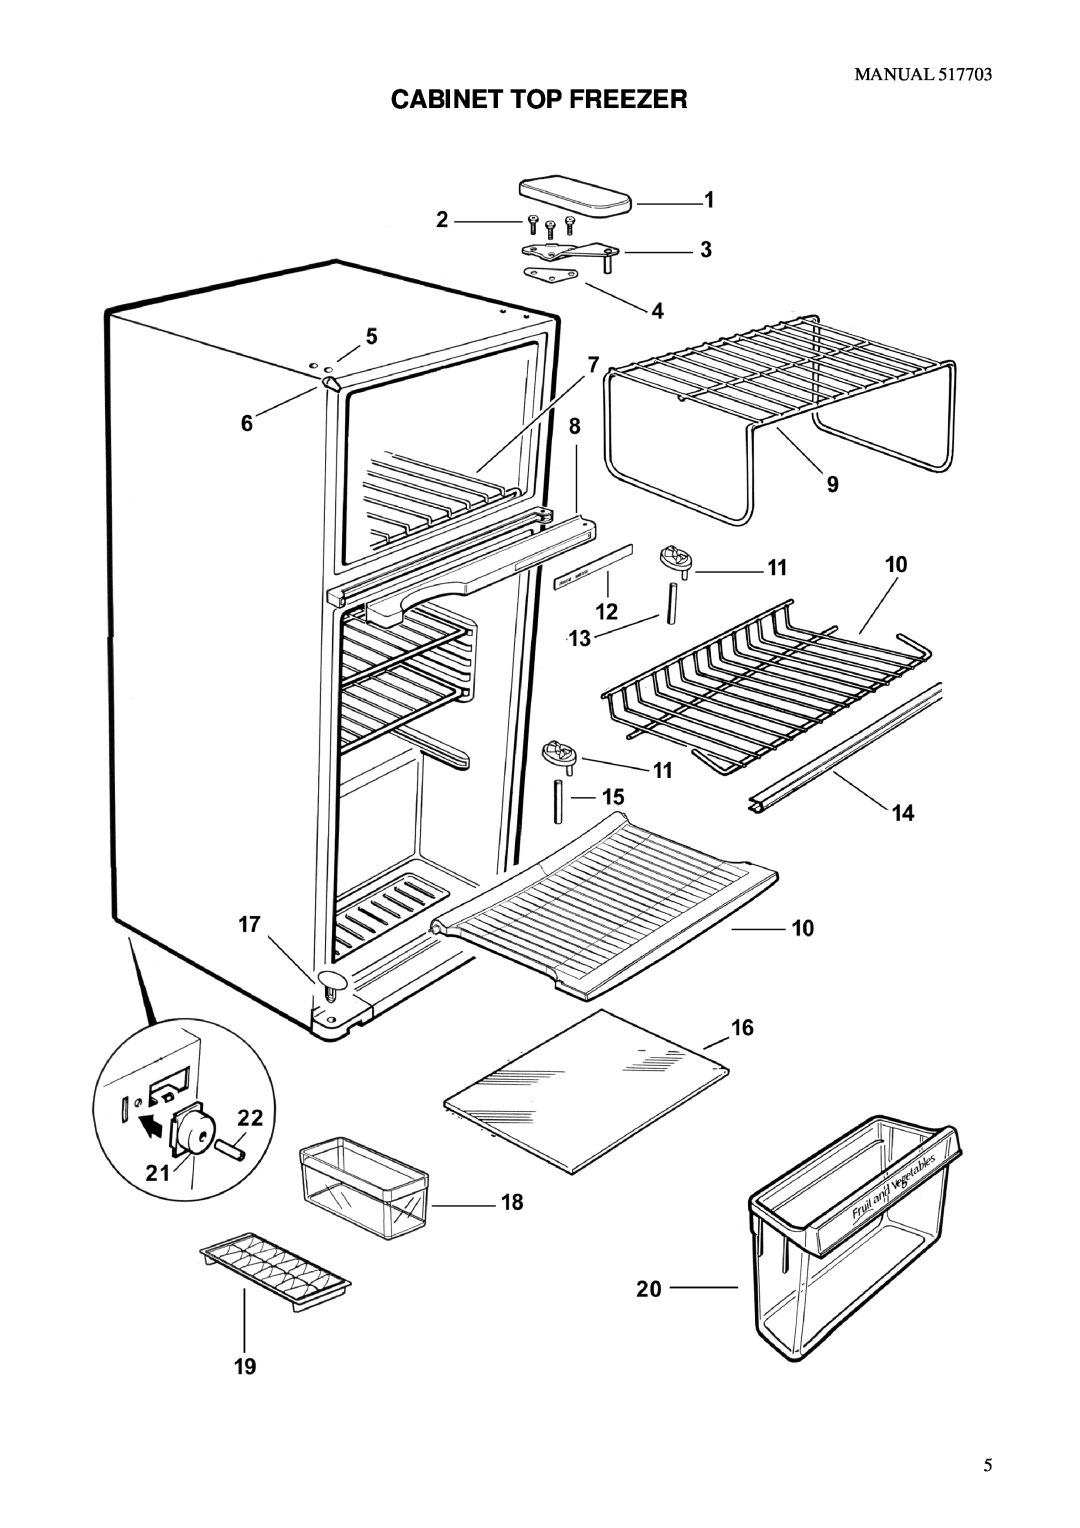 Fisher & Paykel N249T, N169T manual Cabinet Top Freezer, Manual 